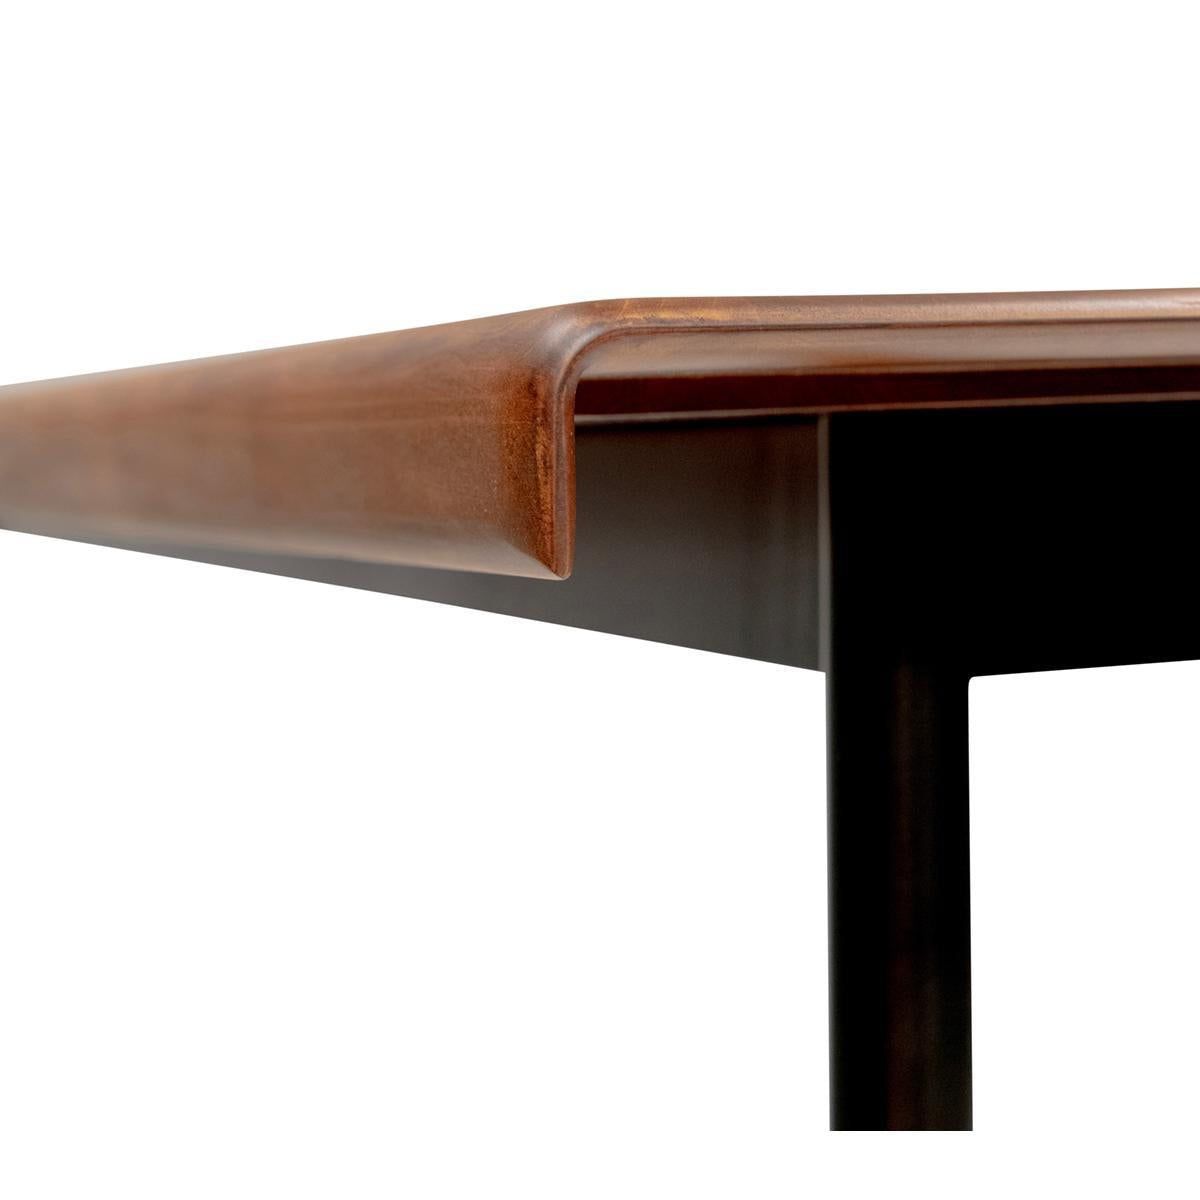 Brown Wood Dining Table with Black Steel Legs